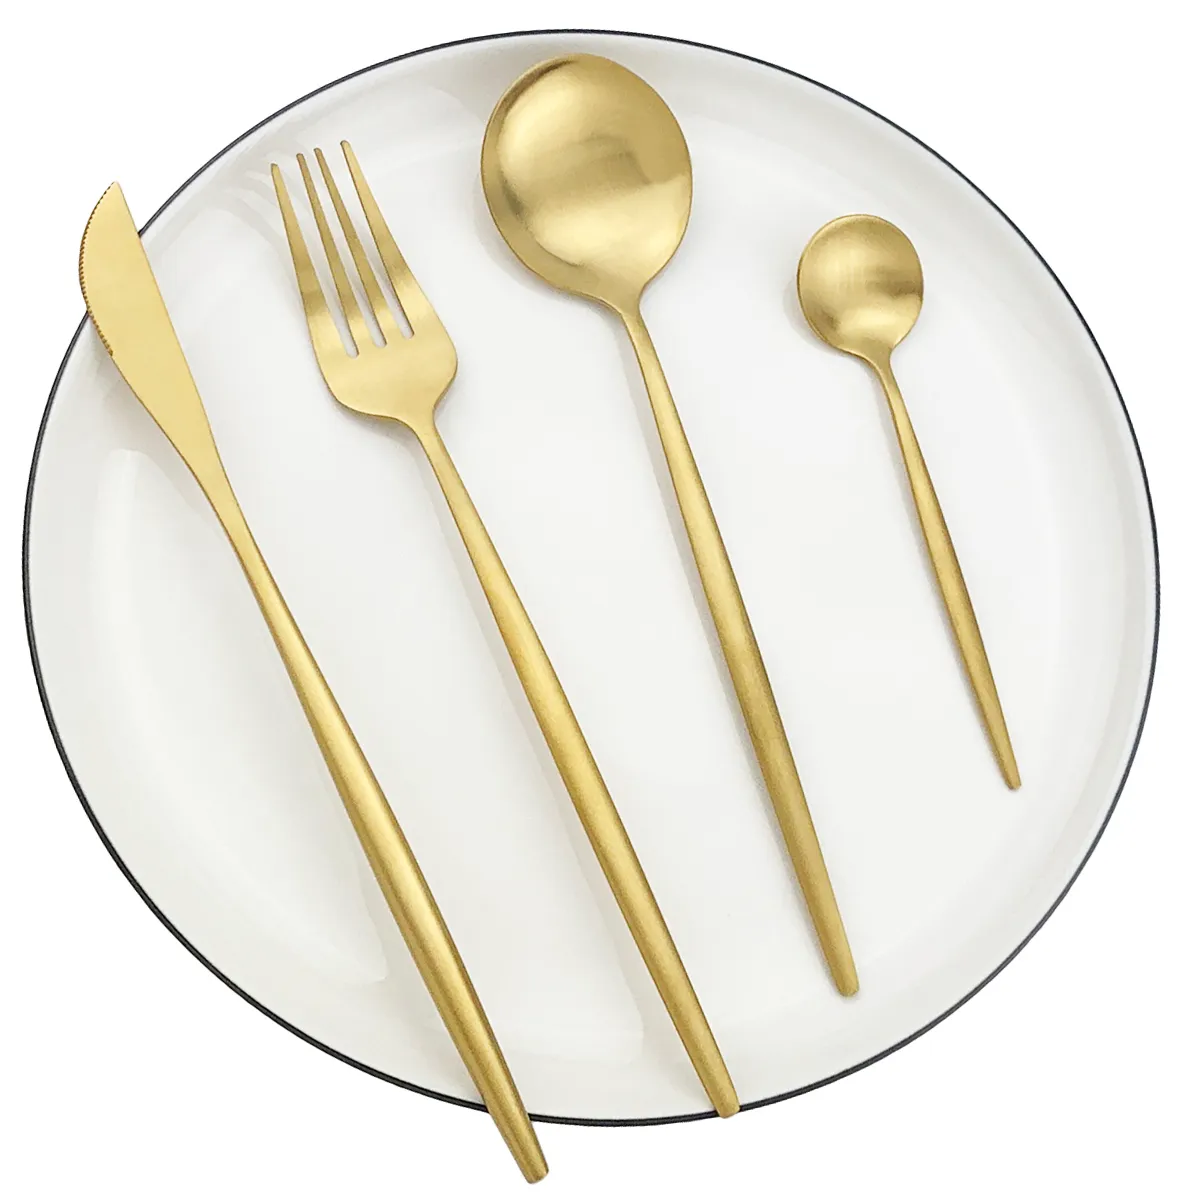 Bianco Gold Gold Dinnerwardware Set 304 Acciaio inox Acciaio inox Forcella Cucchiaio Stringware Posate Set da cucina Flatware Set di stoviglie Set 201116